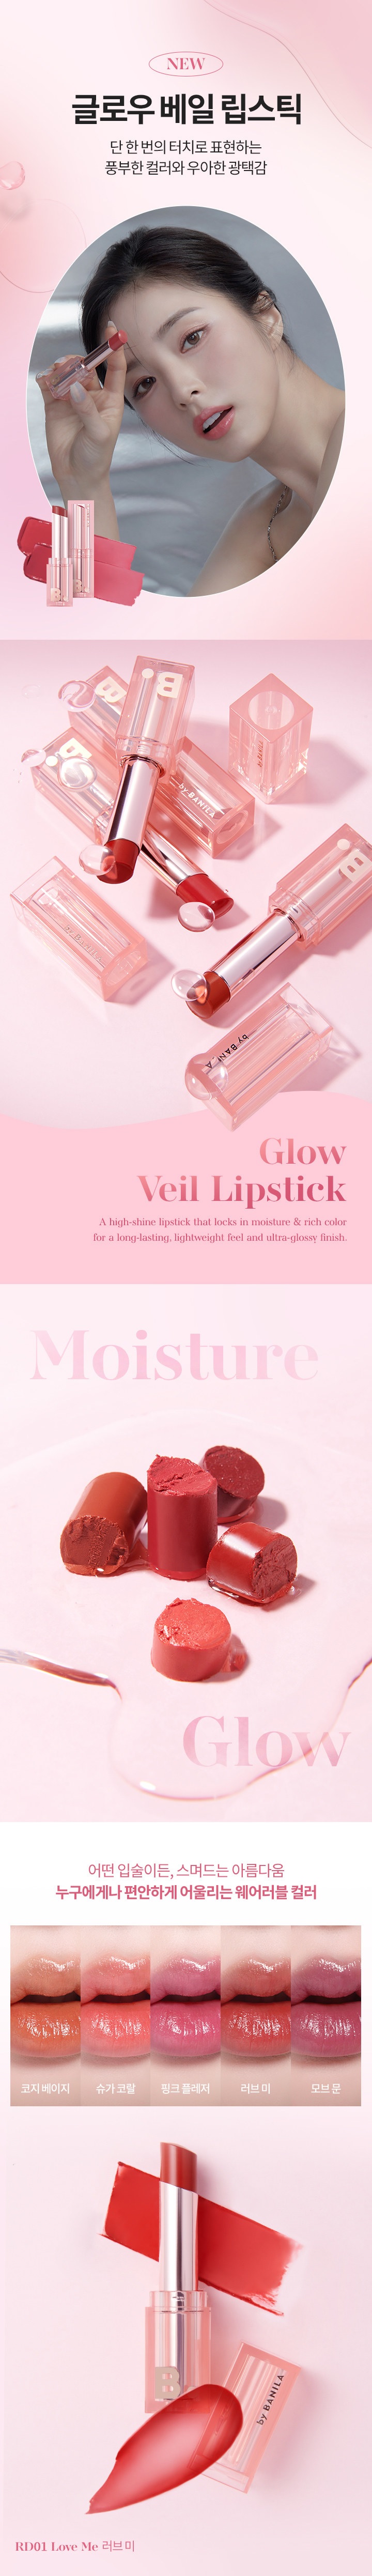 Banila Co Glow Veil Lipstick korean skincare product online shop malaysia china usa1